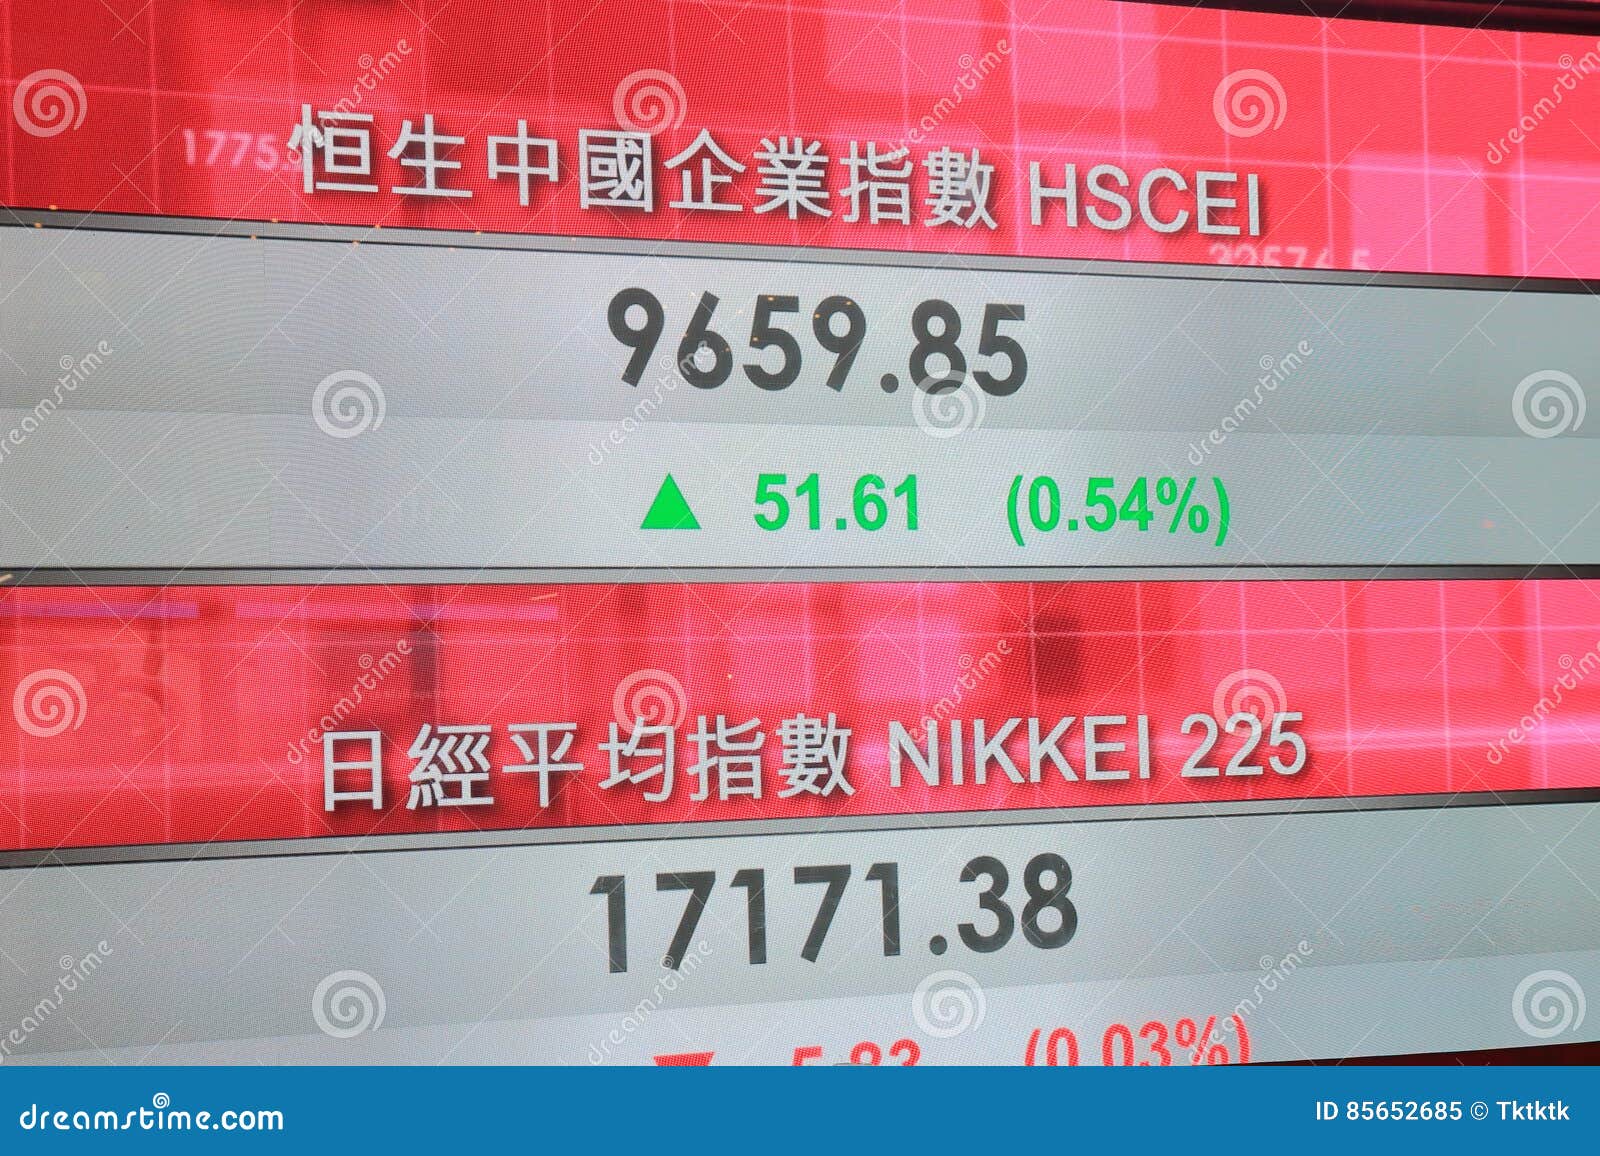 Hong kong stock index